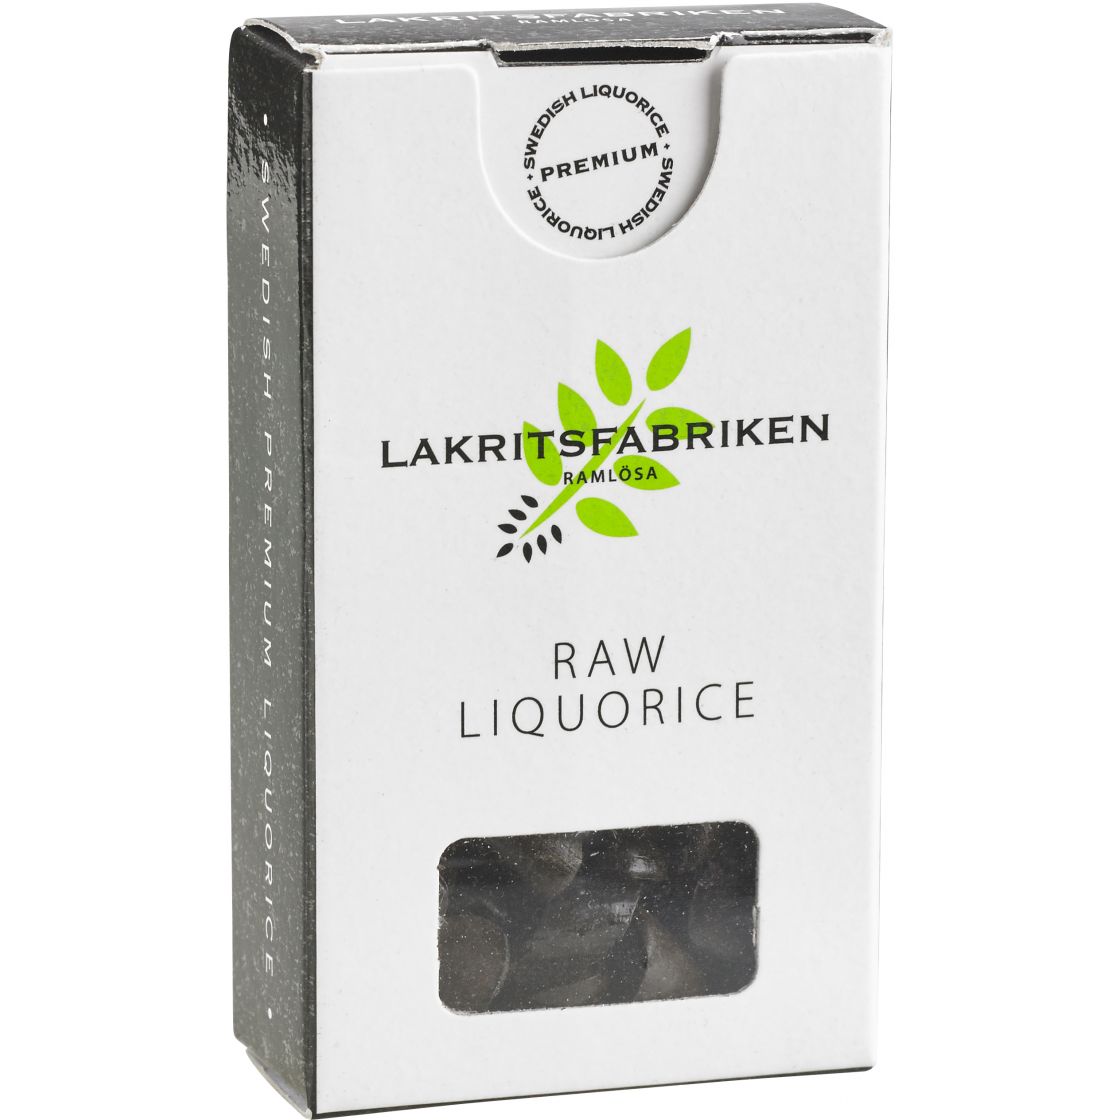 Lakritsfabriken raw liquorice